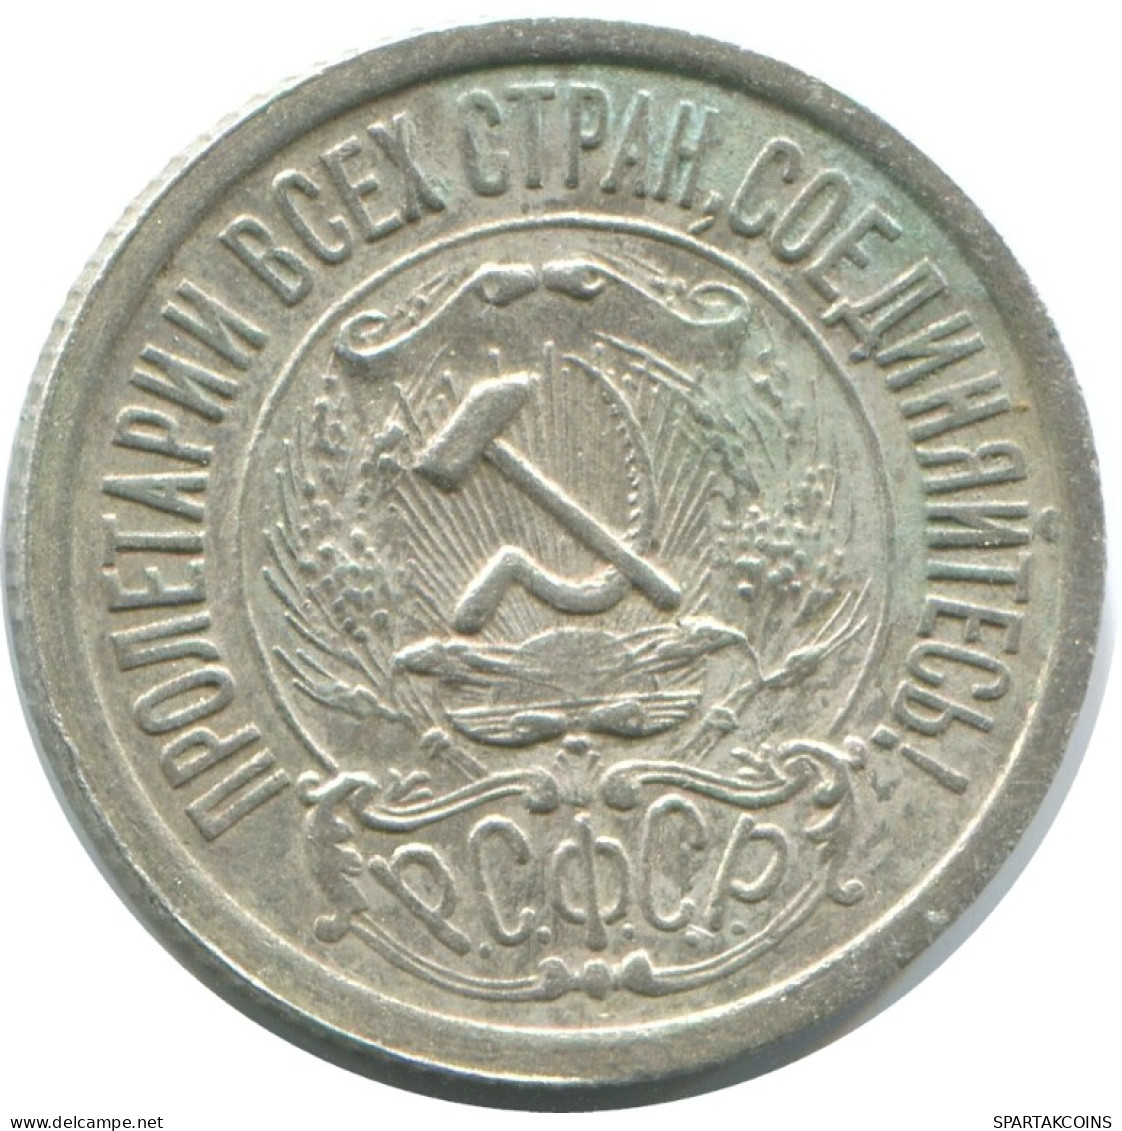 15 KOPEKS 1922 RUSSIA RSFSR SILVER Coin HIGH GRADE #AF216.4.U.A - Russie